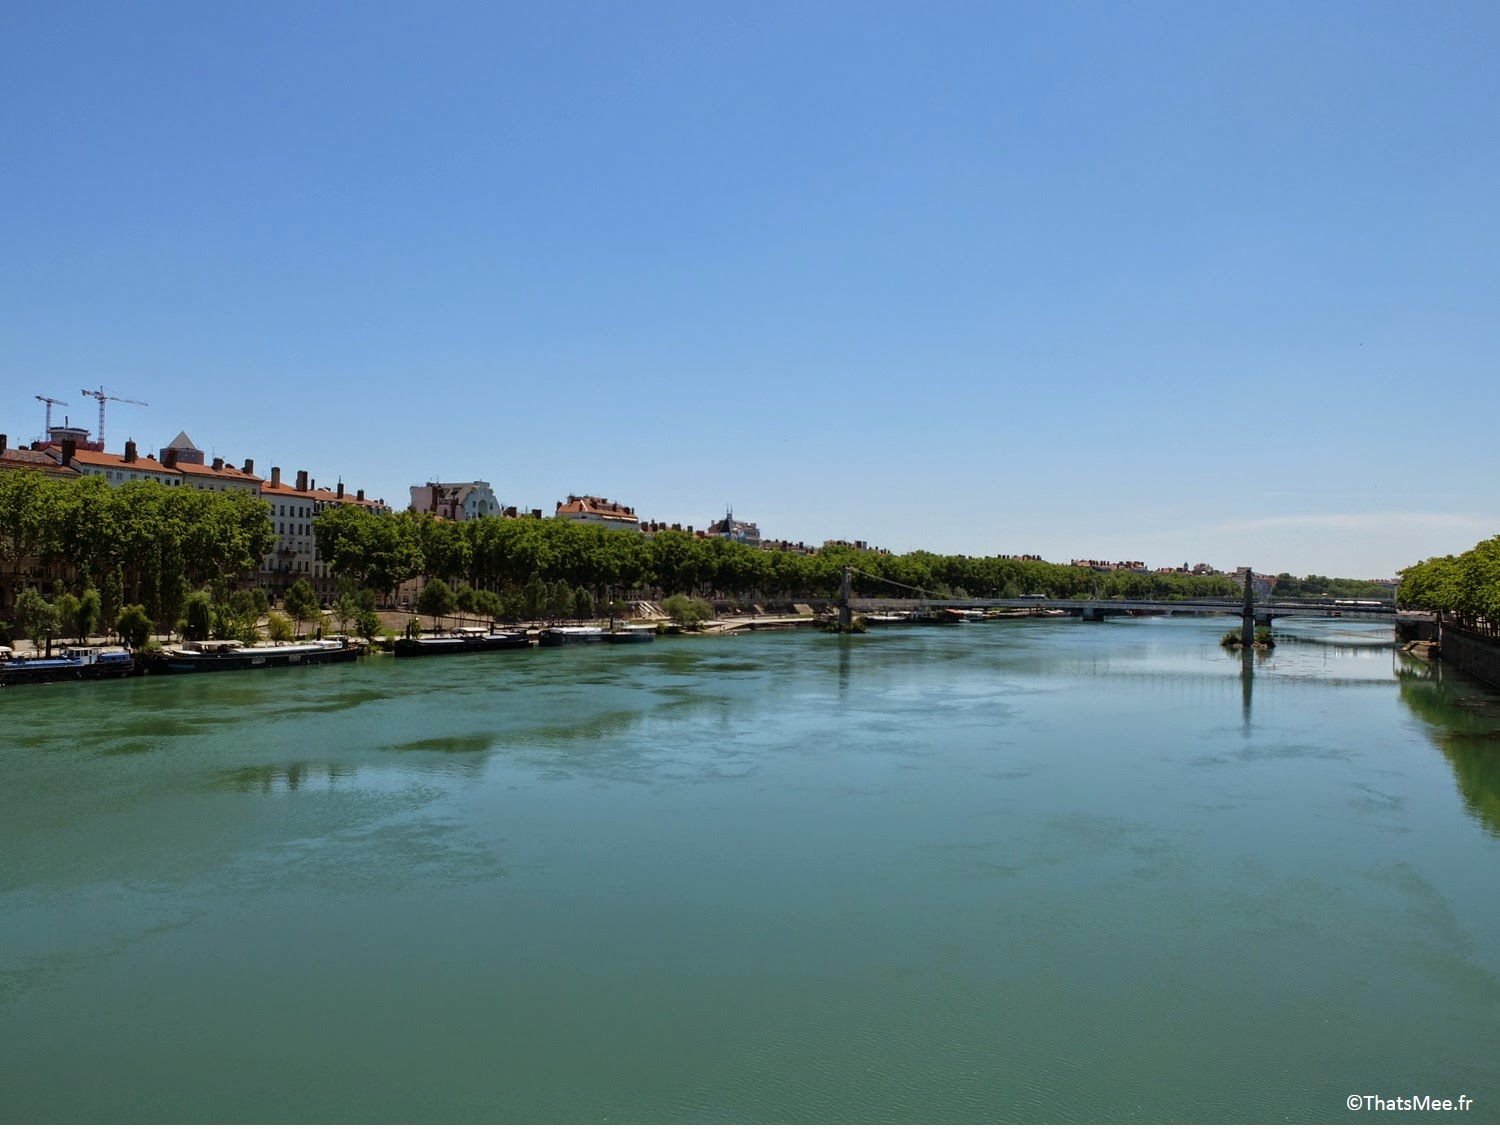 Balade sur la Saône en aviron rivière affluent Rhône Lyon visiter ThatsMee.fr